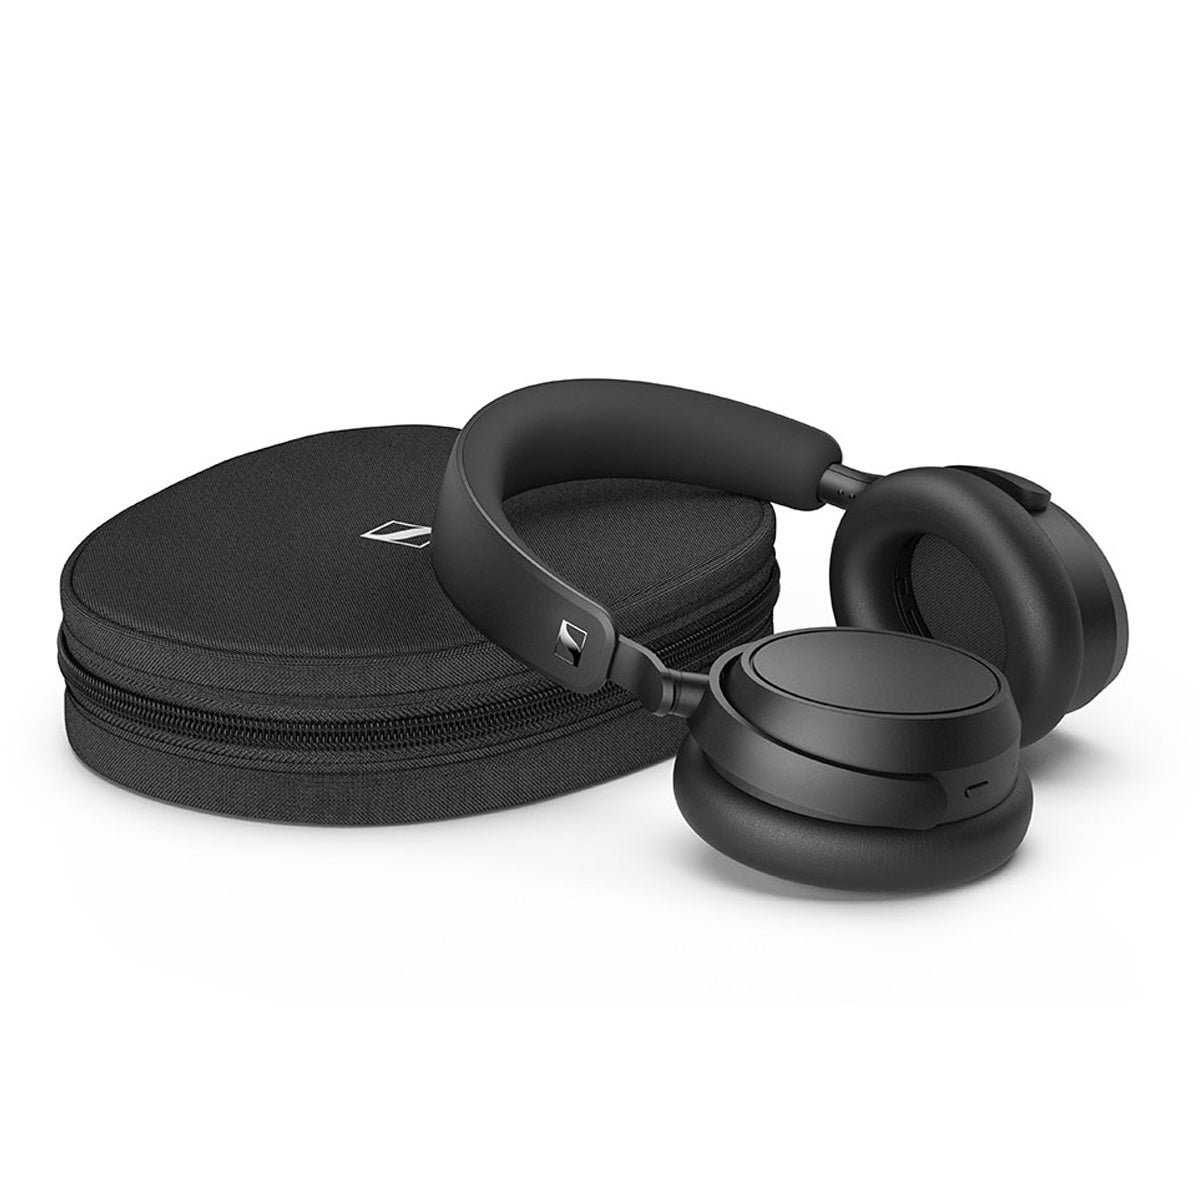 Sennheiser Accentum PLUS Wireless Active Noise Cancelling Headphones - Black